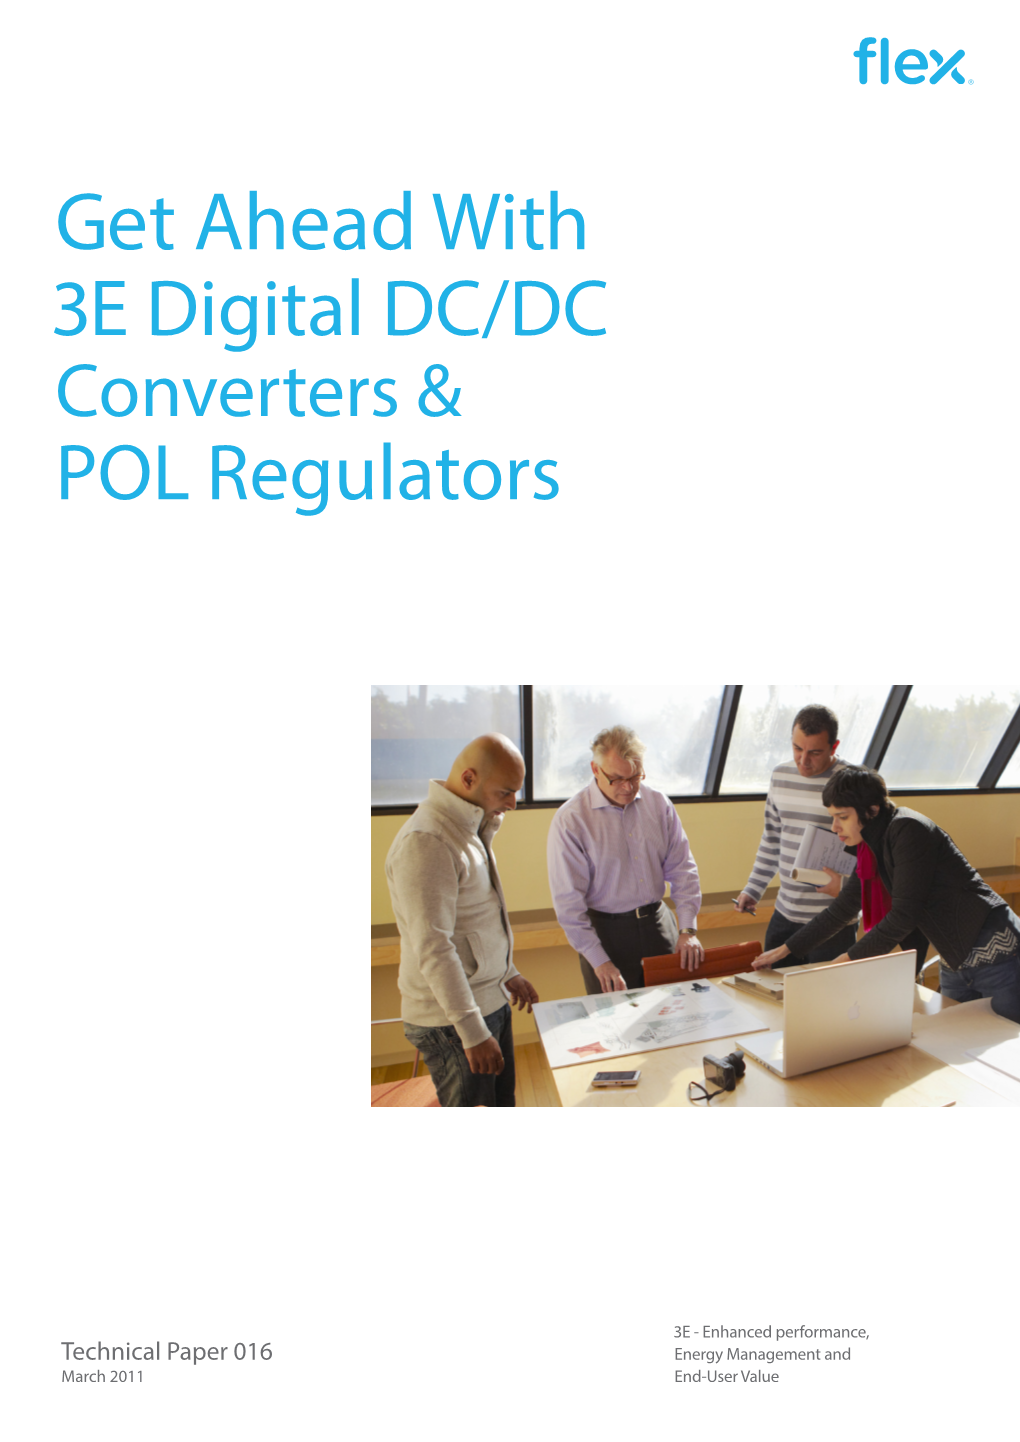 Get Ahead with 3E Digital DC/DC Converters & POL Regulators